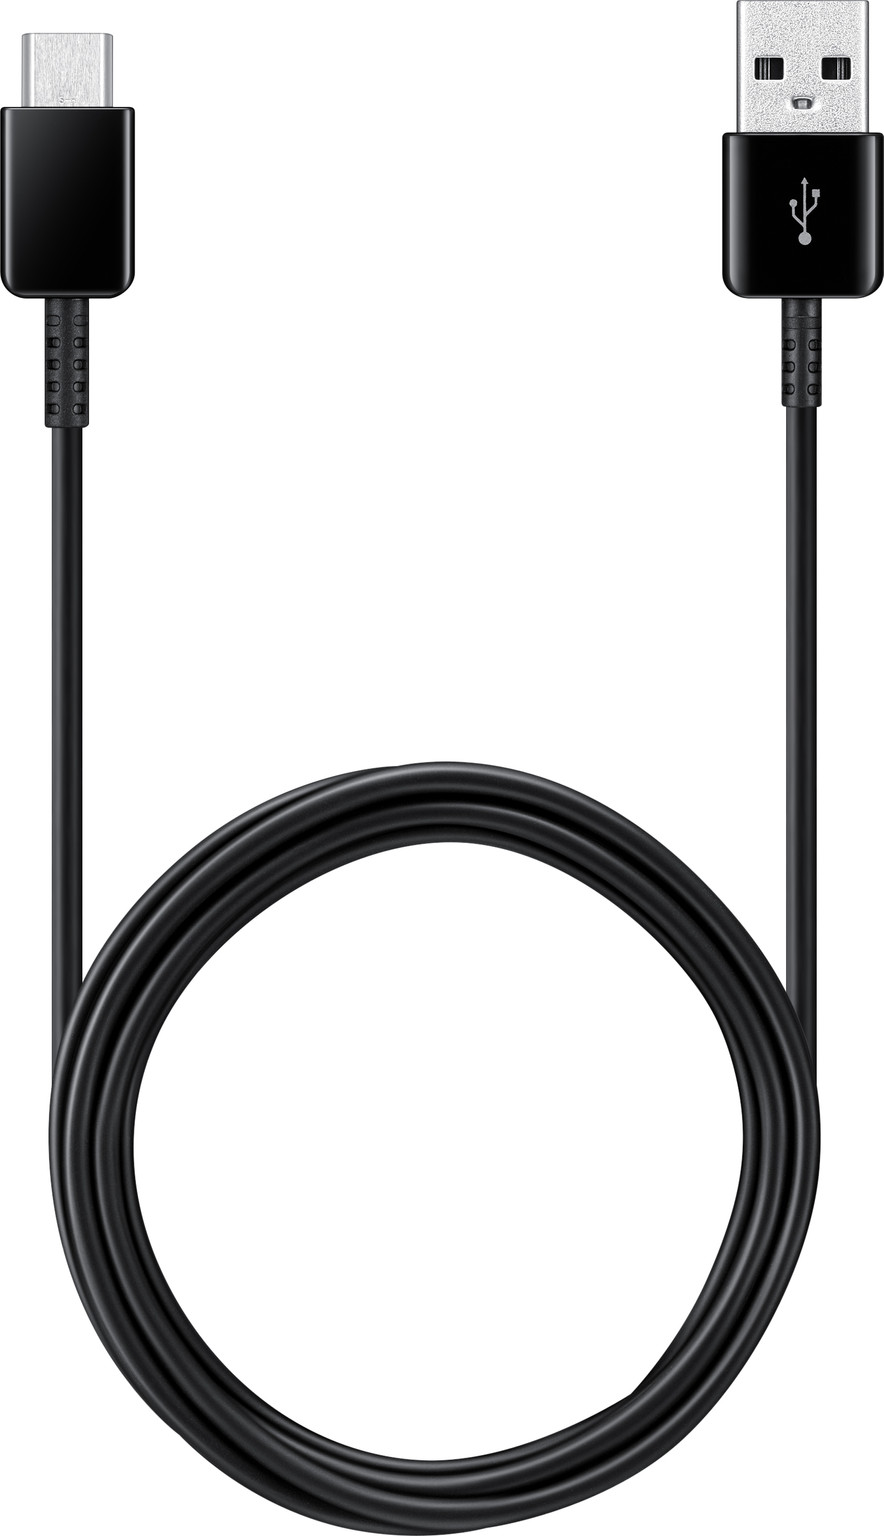 Scarp Vergissing Ieder Samsung Galaxy Tab S6 Oplaadkabel USB C 2 meter zwart - Gsm-Oplader.nl